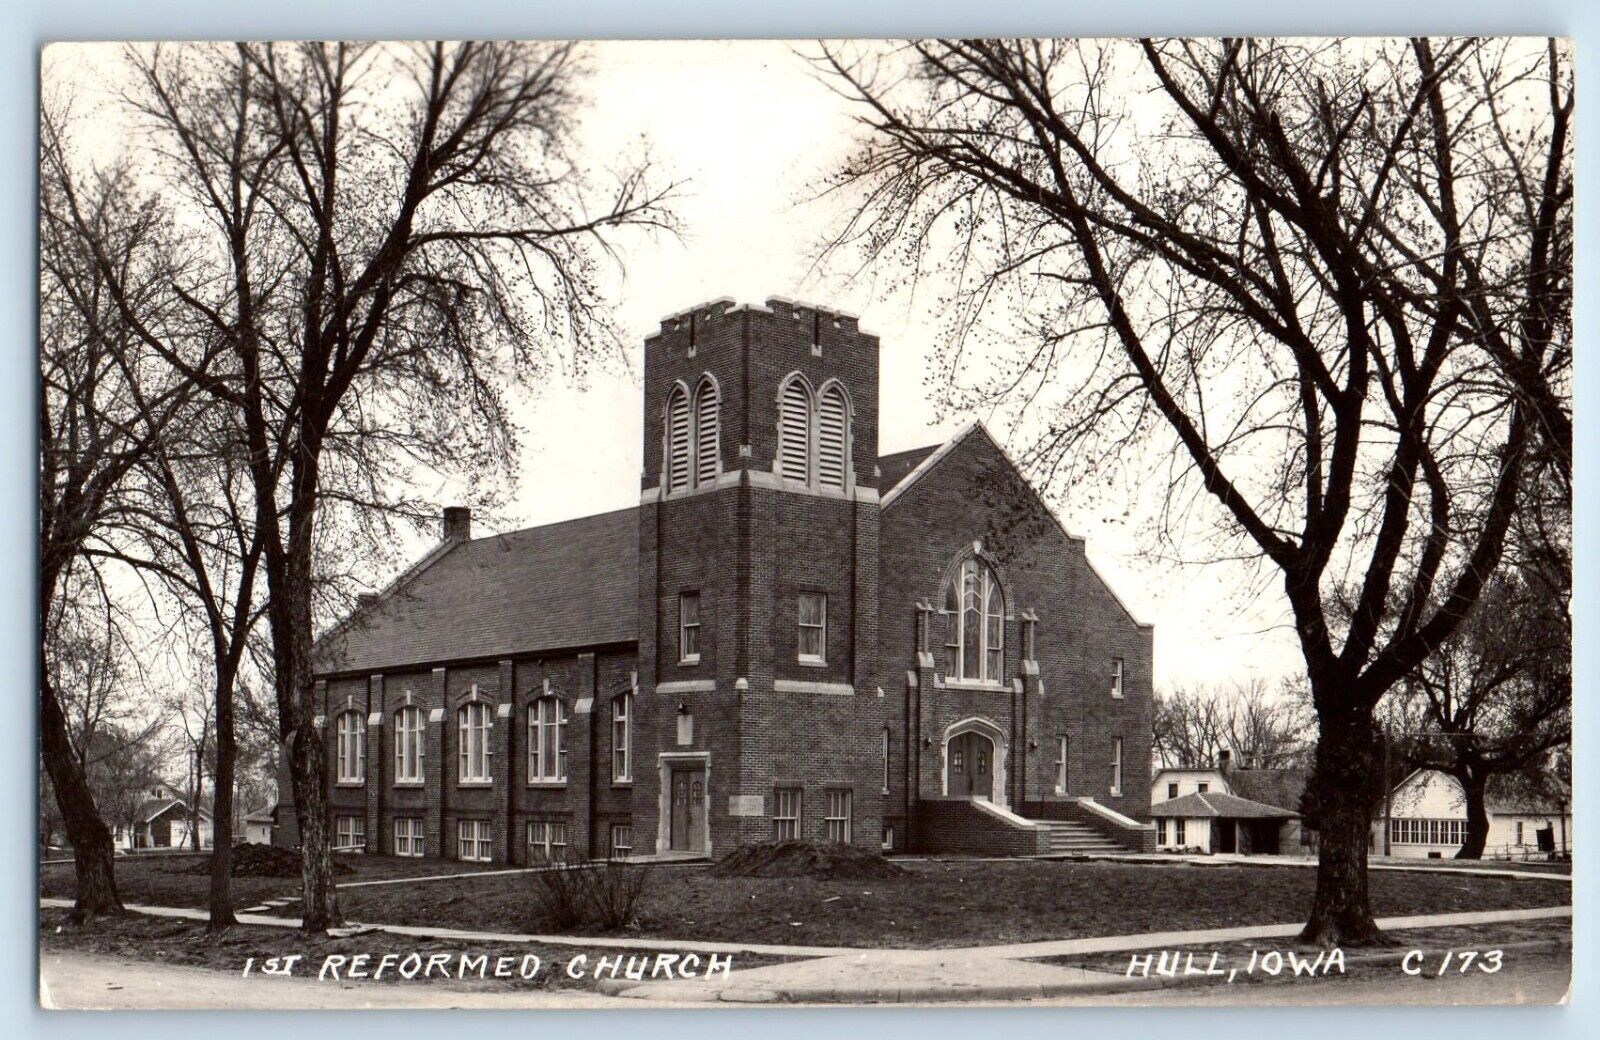 Hull Iowa IA Postcard RPPC Photo 1st Reformed Church Scene Street c1940s Vintage